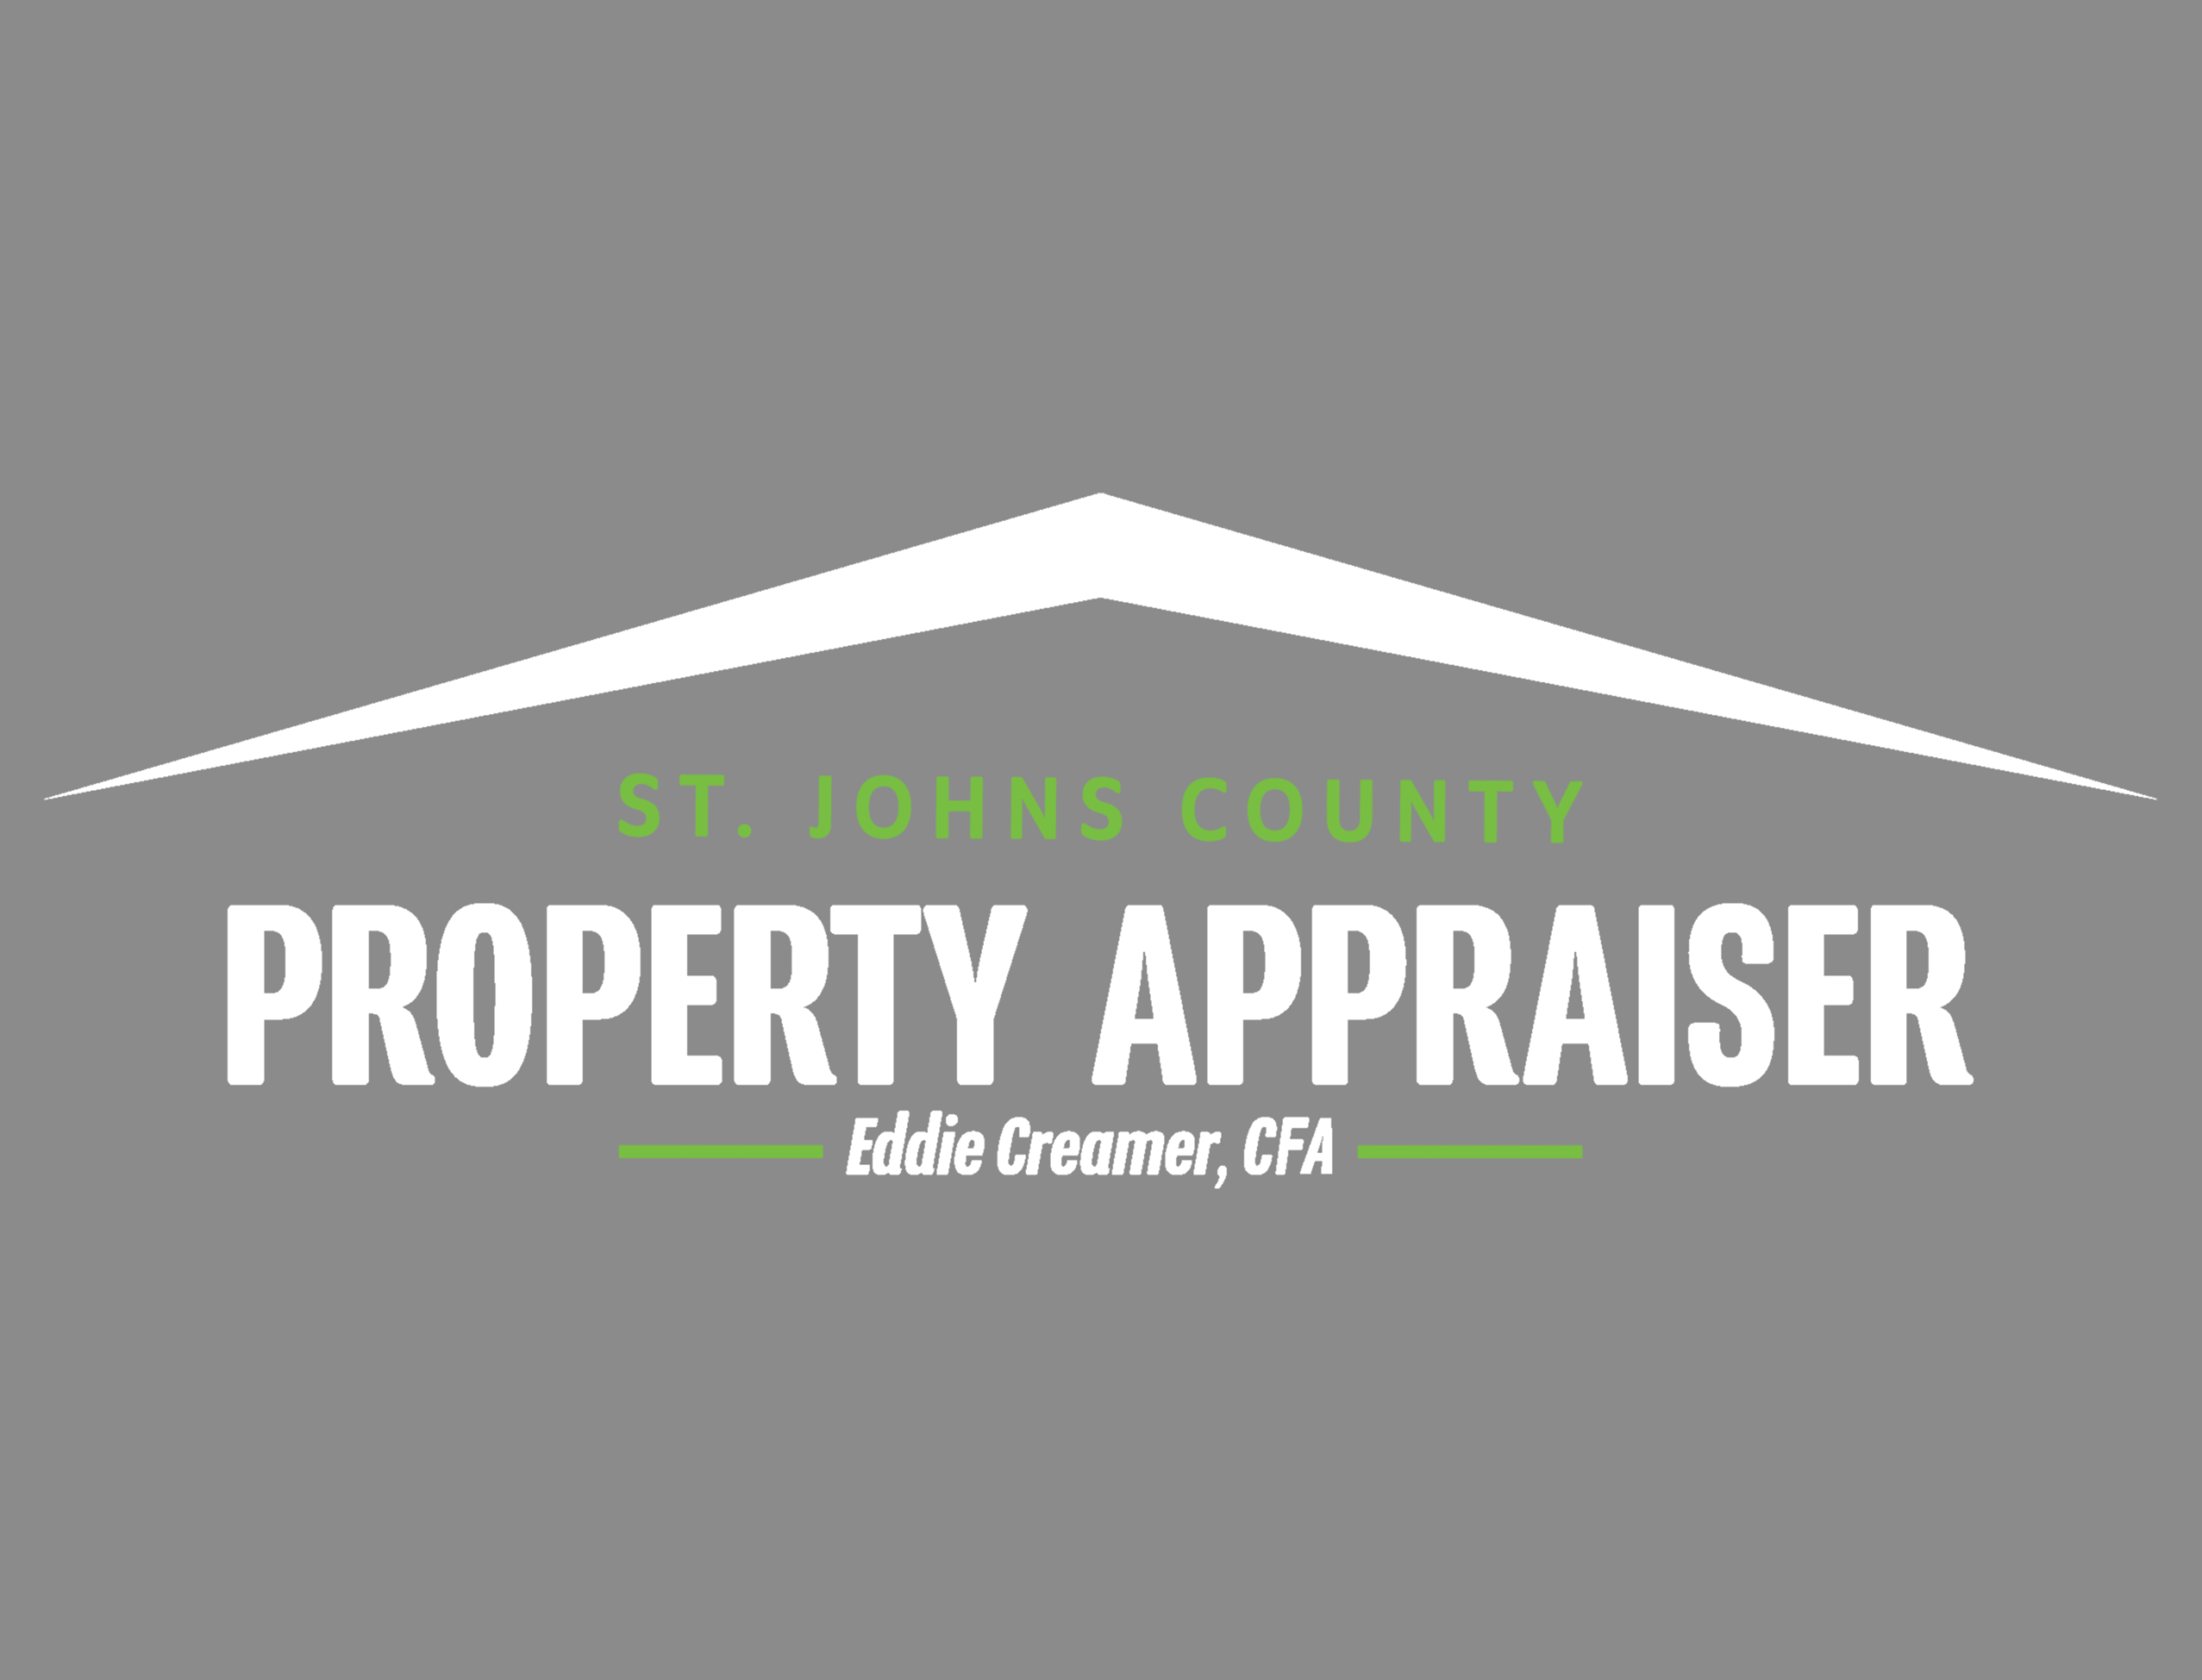 St Johns County Property Appraiser